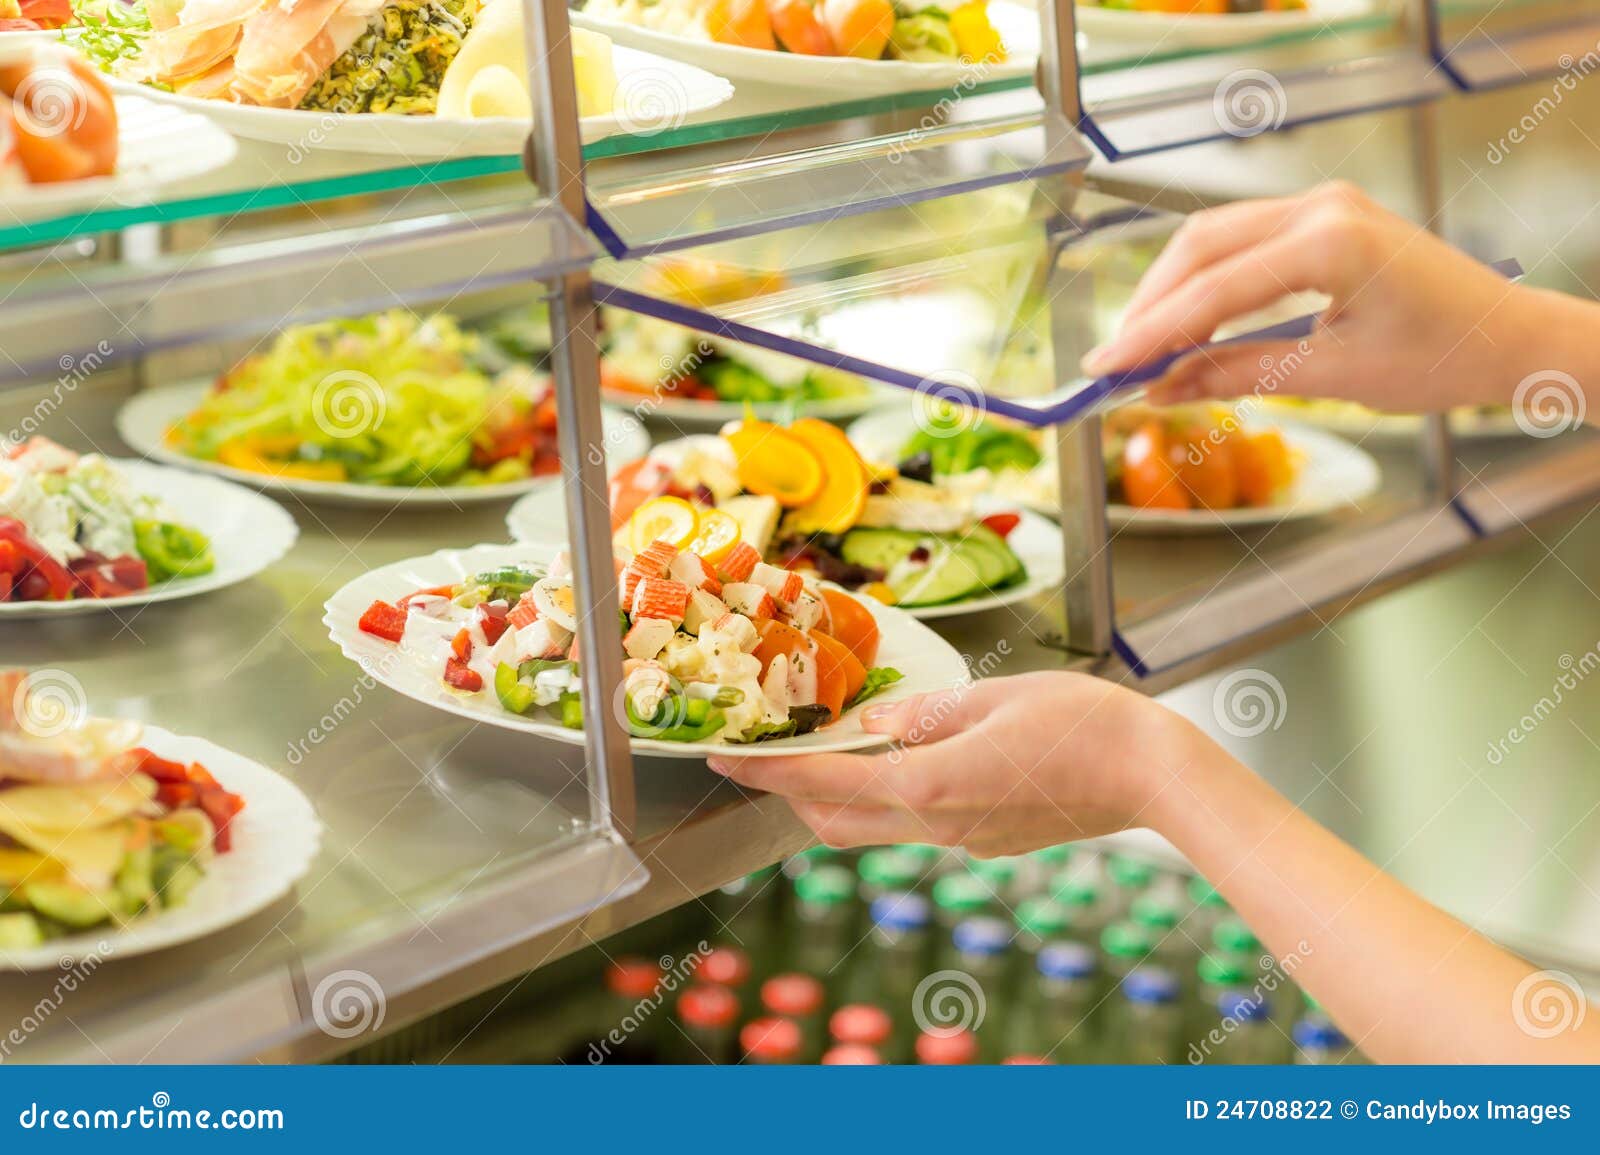 buffet self service canteen display fresh salad